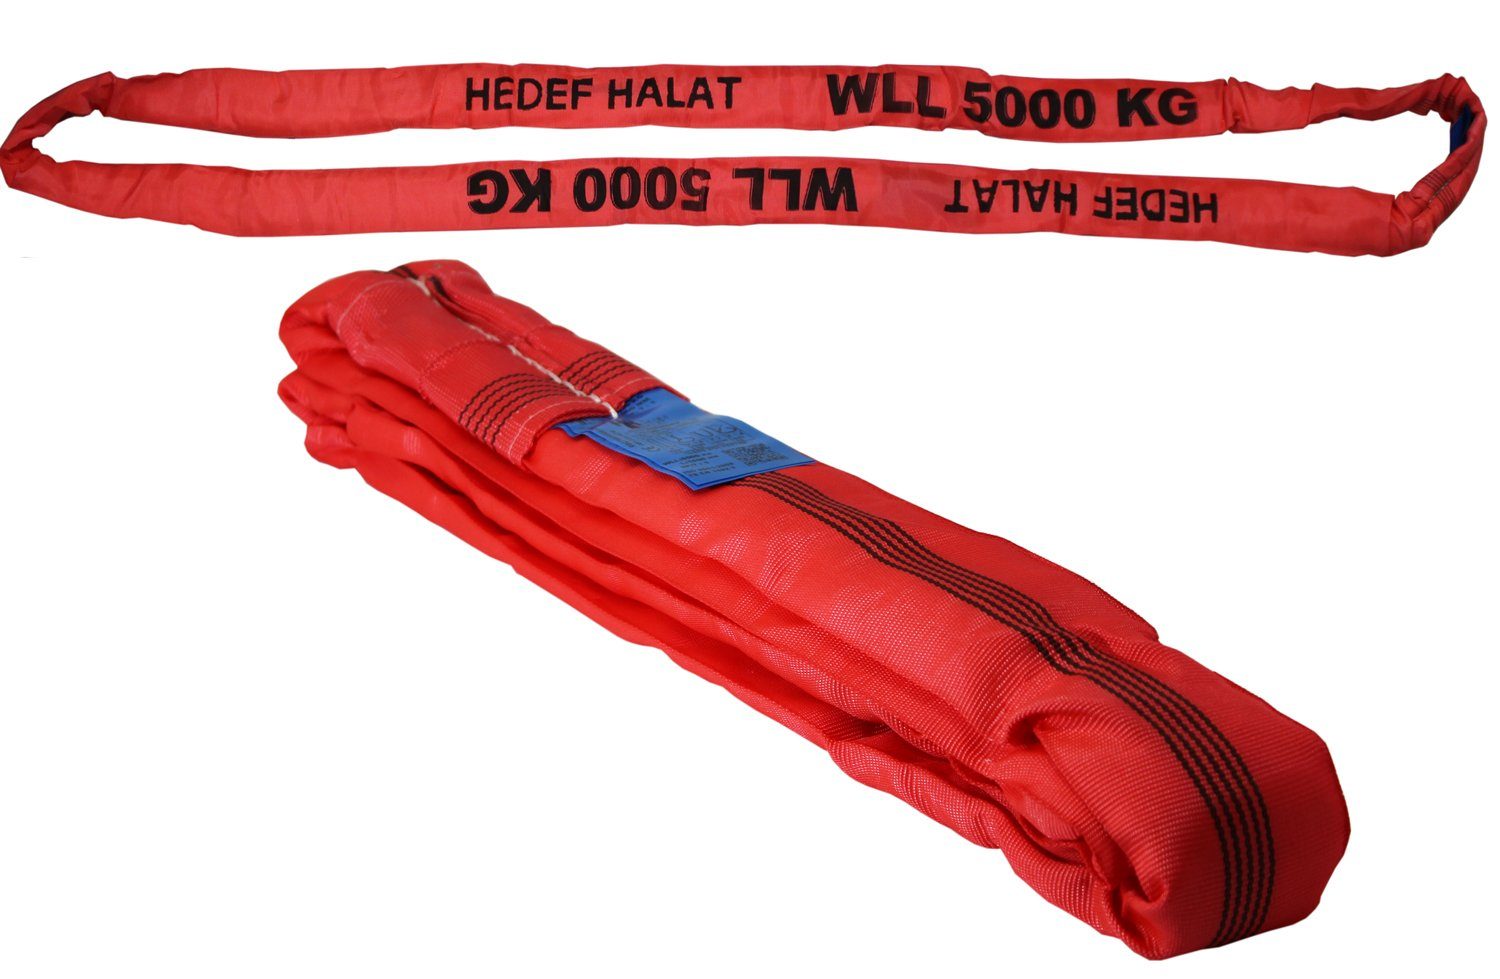 HEDEF HALAT Rundschlinge mit Einfachmantel 5 Tonnen 1.5 Meter SF: 7/1 DIN EN 1492- Hebeband, Rundschlingen Bandschlinge Hebegurt 1.5 m (umfang 3 m)